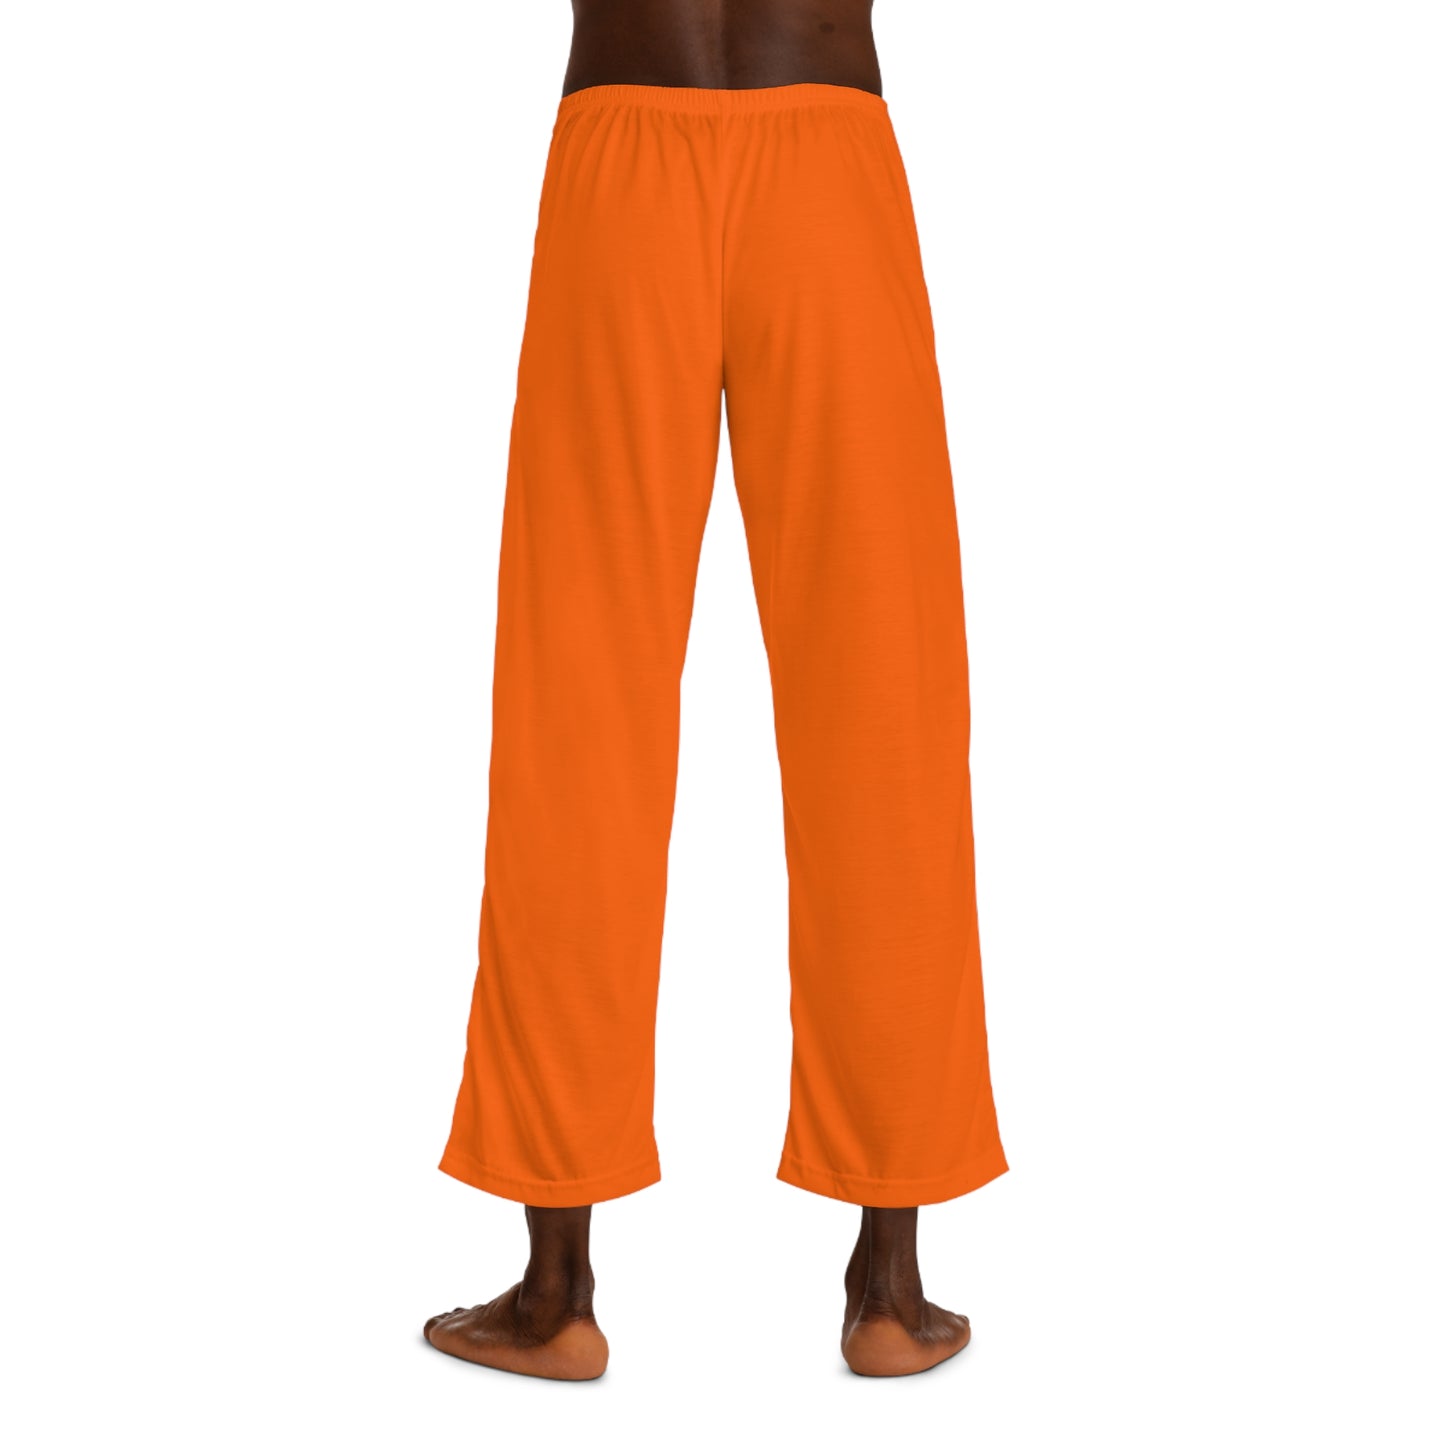 Neon Orange #FF6700 - men's Lounge Pants